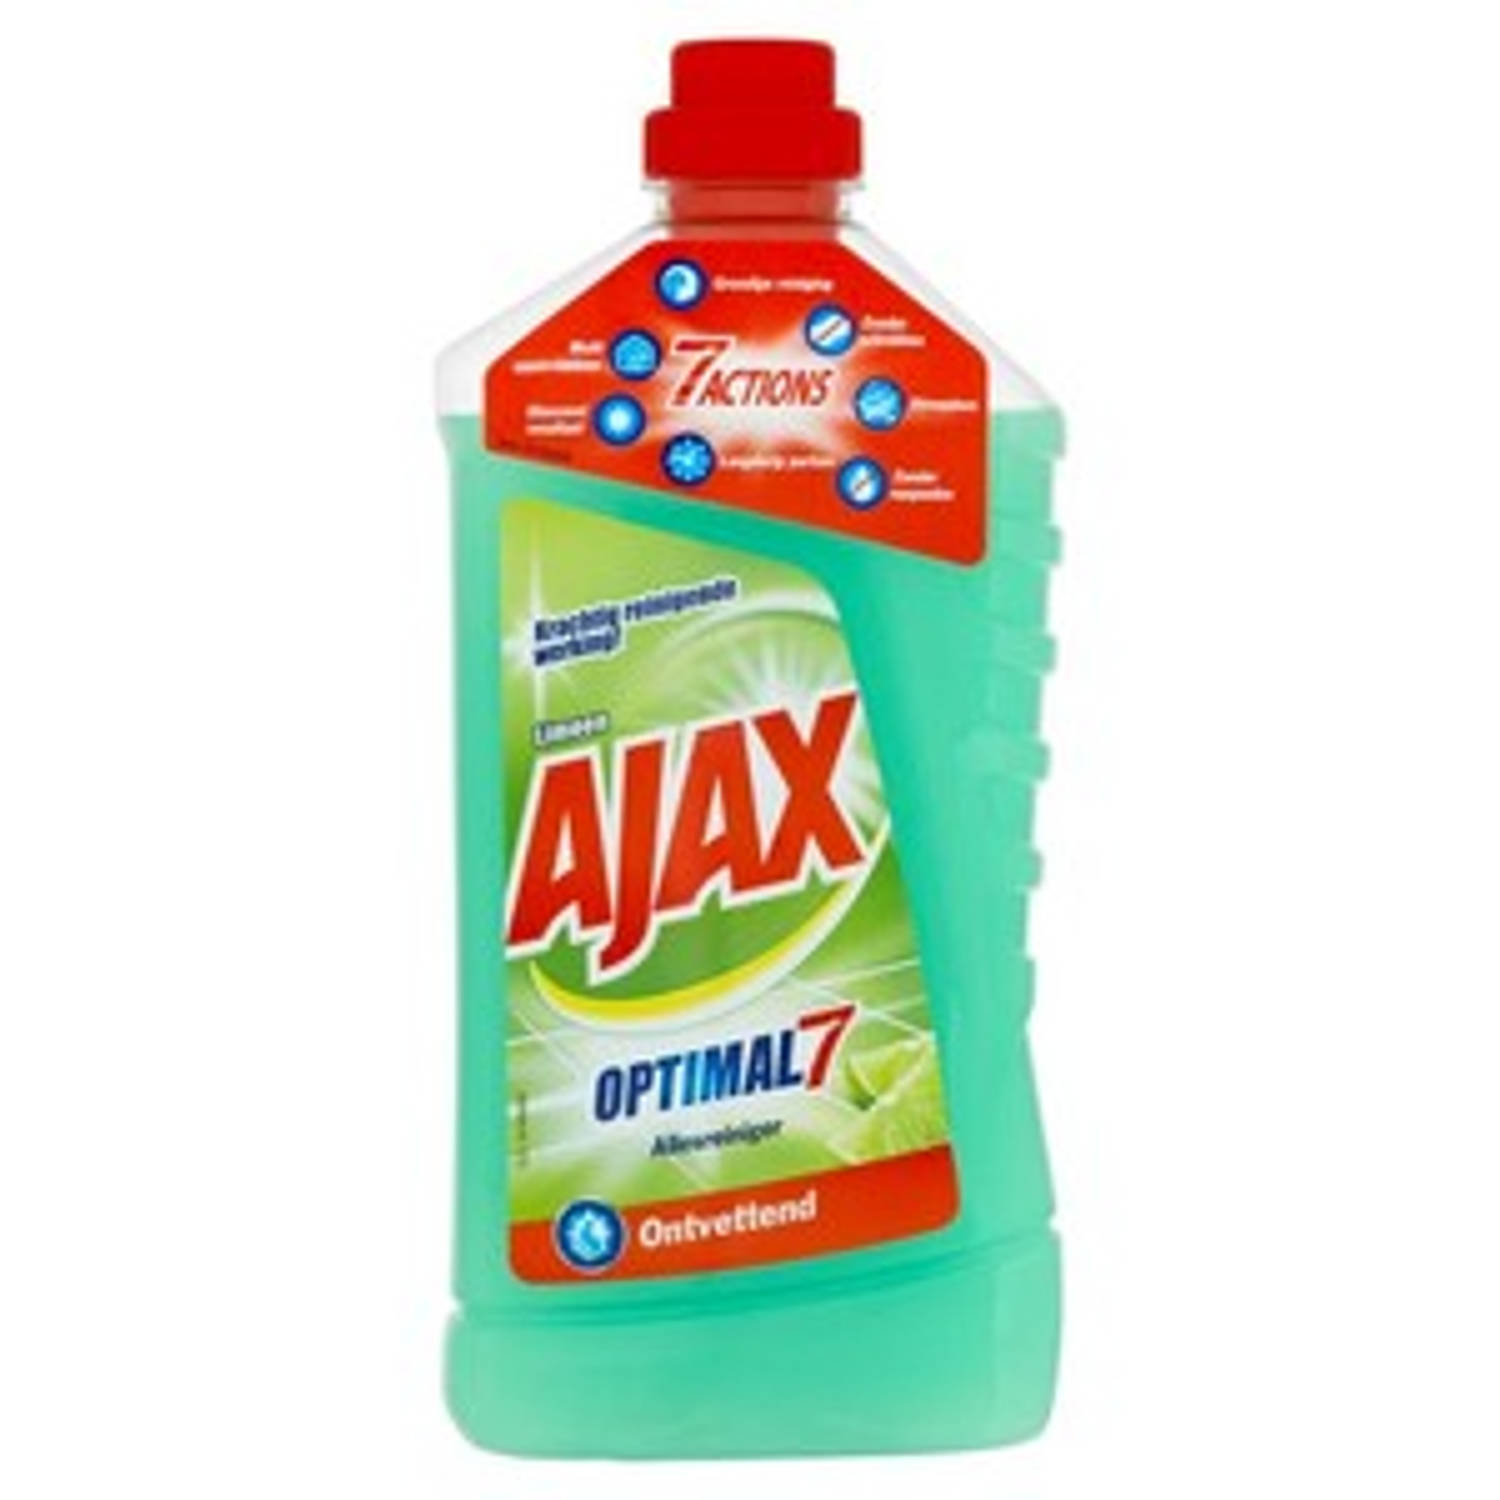 Ajax allesreiniger limoen optimal7 (8x 1 liter)